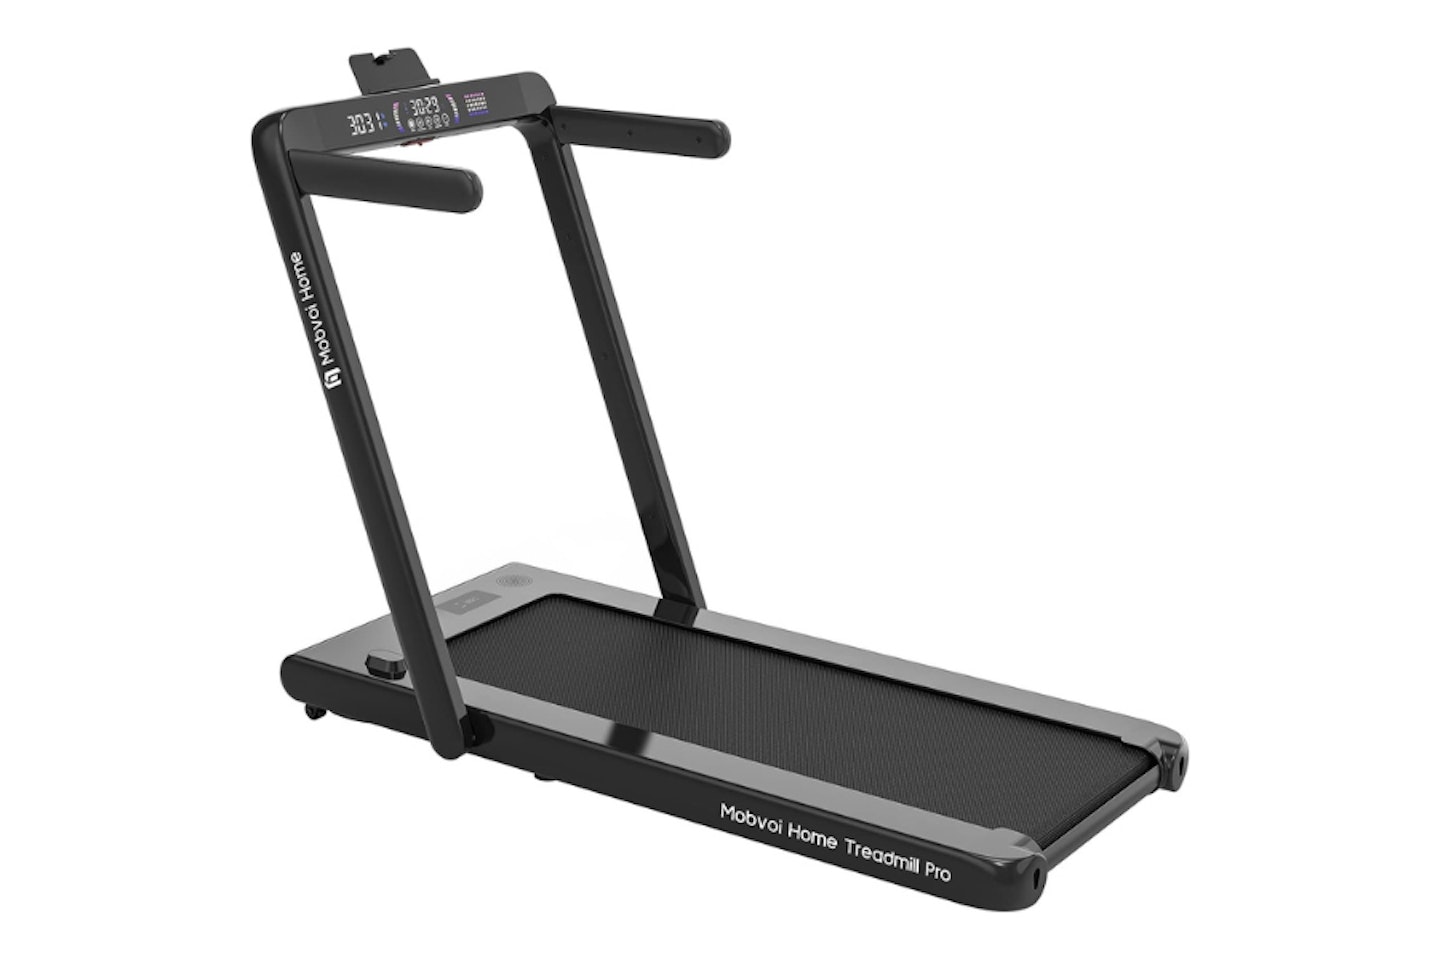 Mobvoi Home Treadmill Pro, Foldable Treadmill